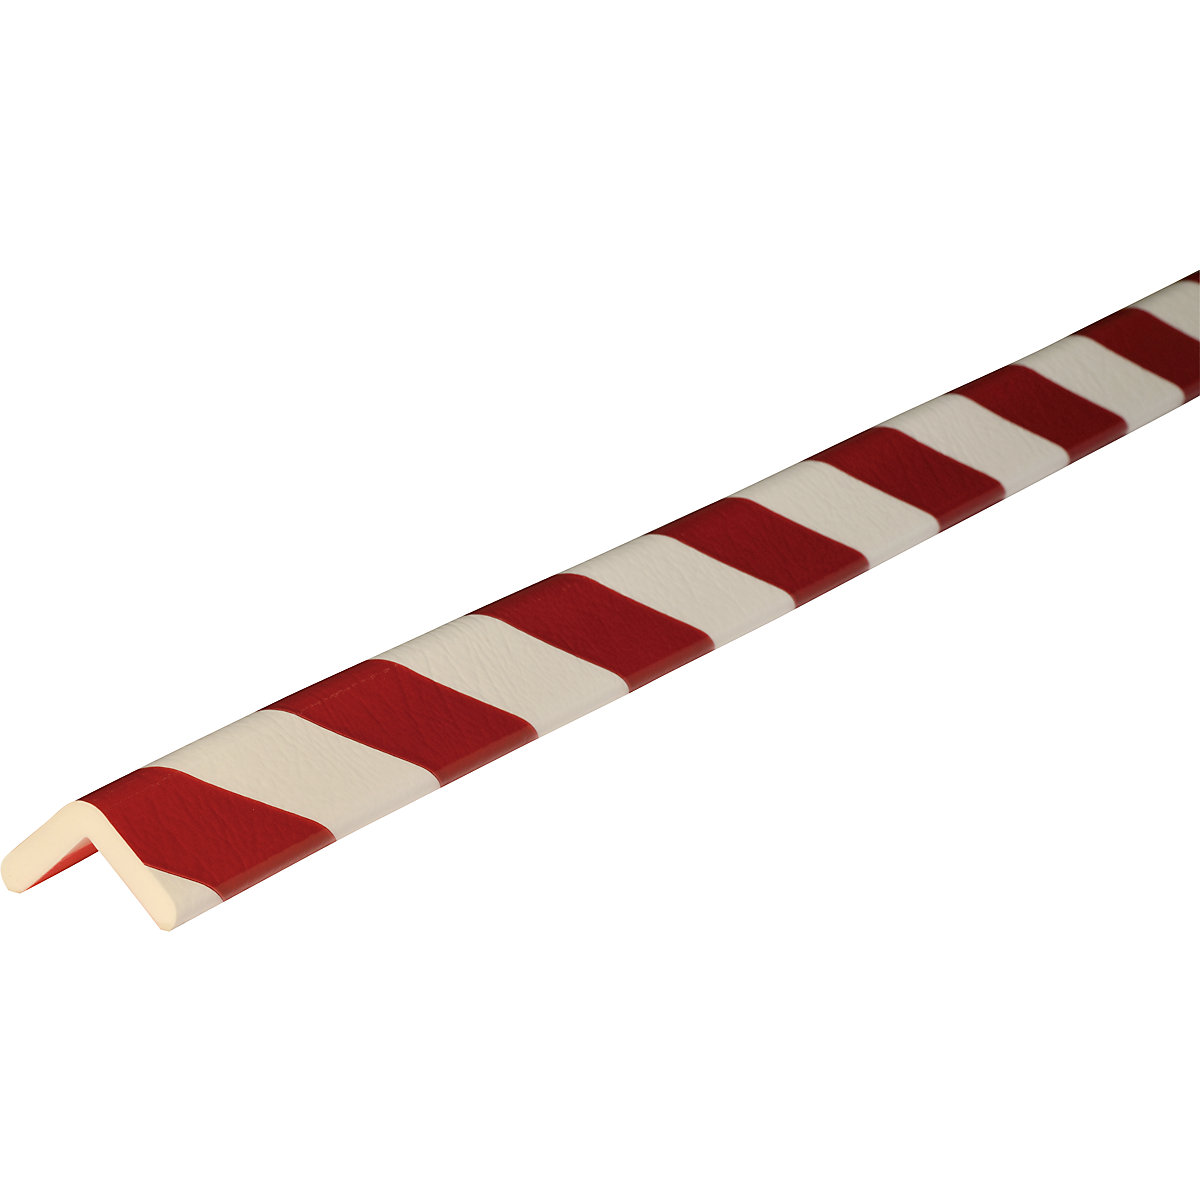 Knuffi®-hoekbescherming – SHG, type H, 1 rol à 5 m, rood/wit-20